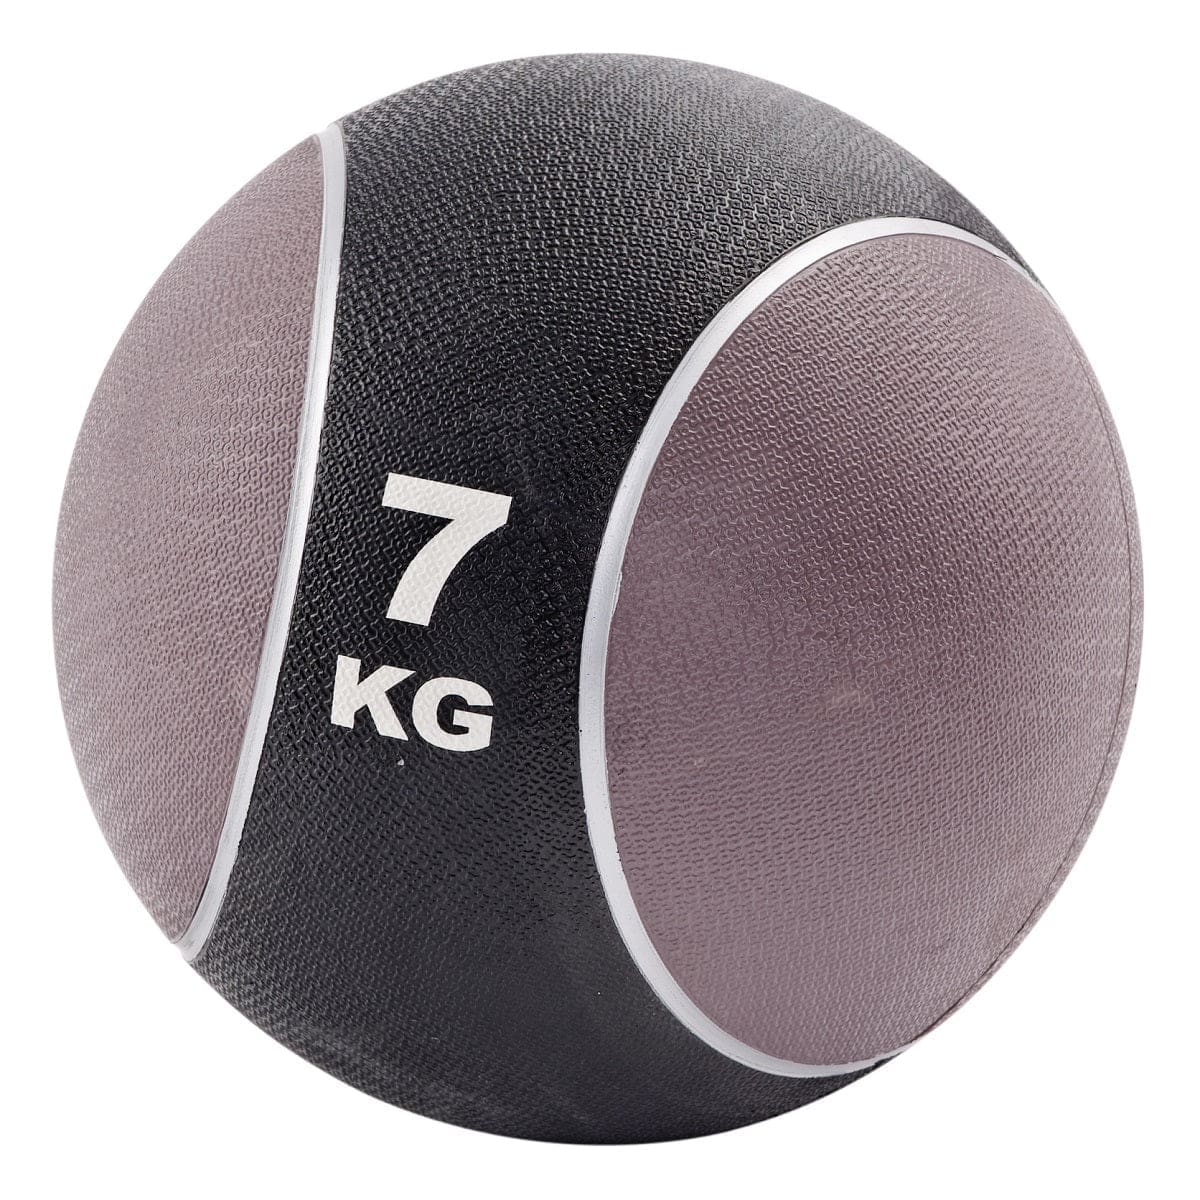 York Fitness 7kg Medicine Ball